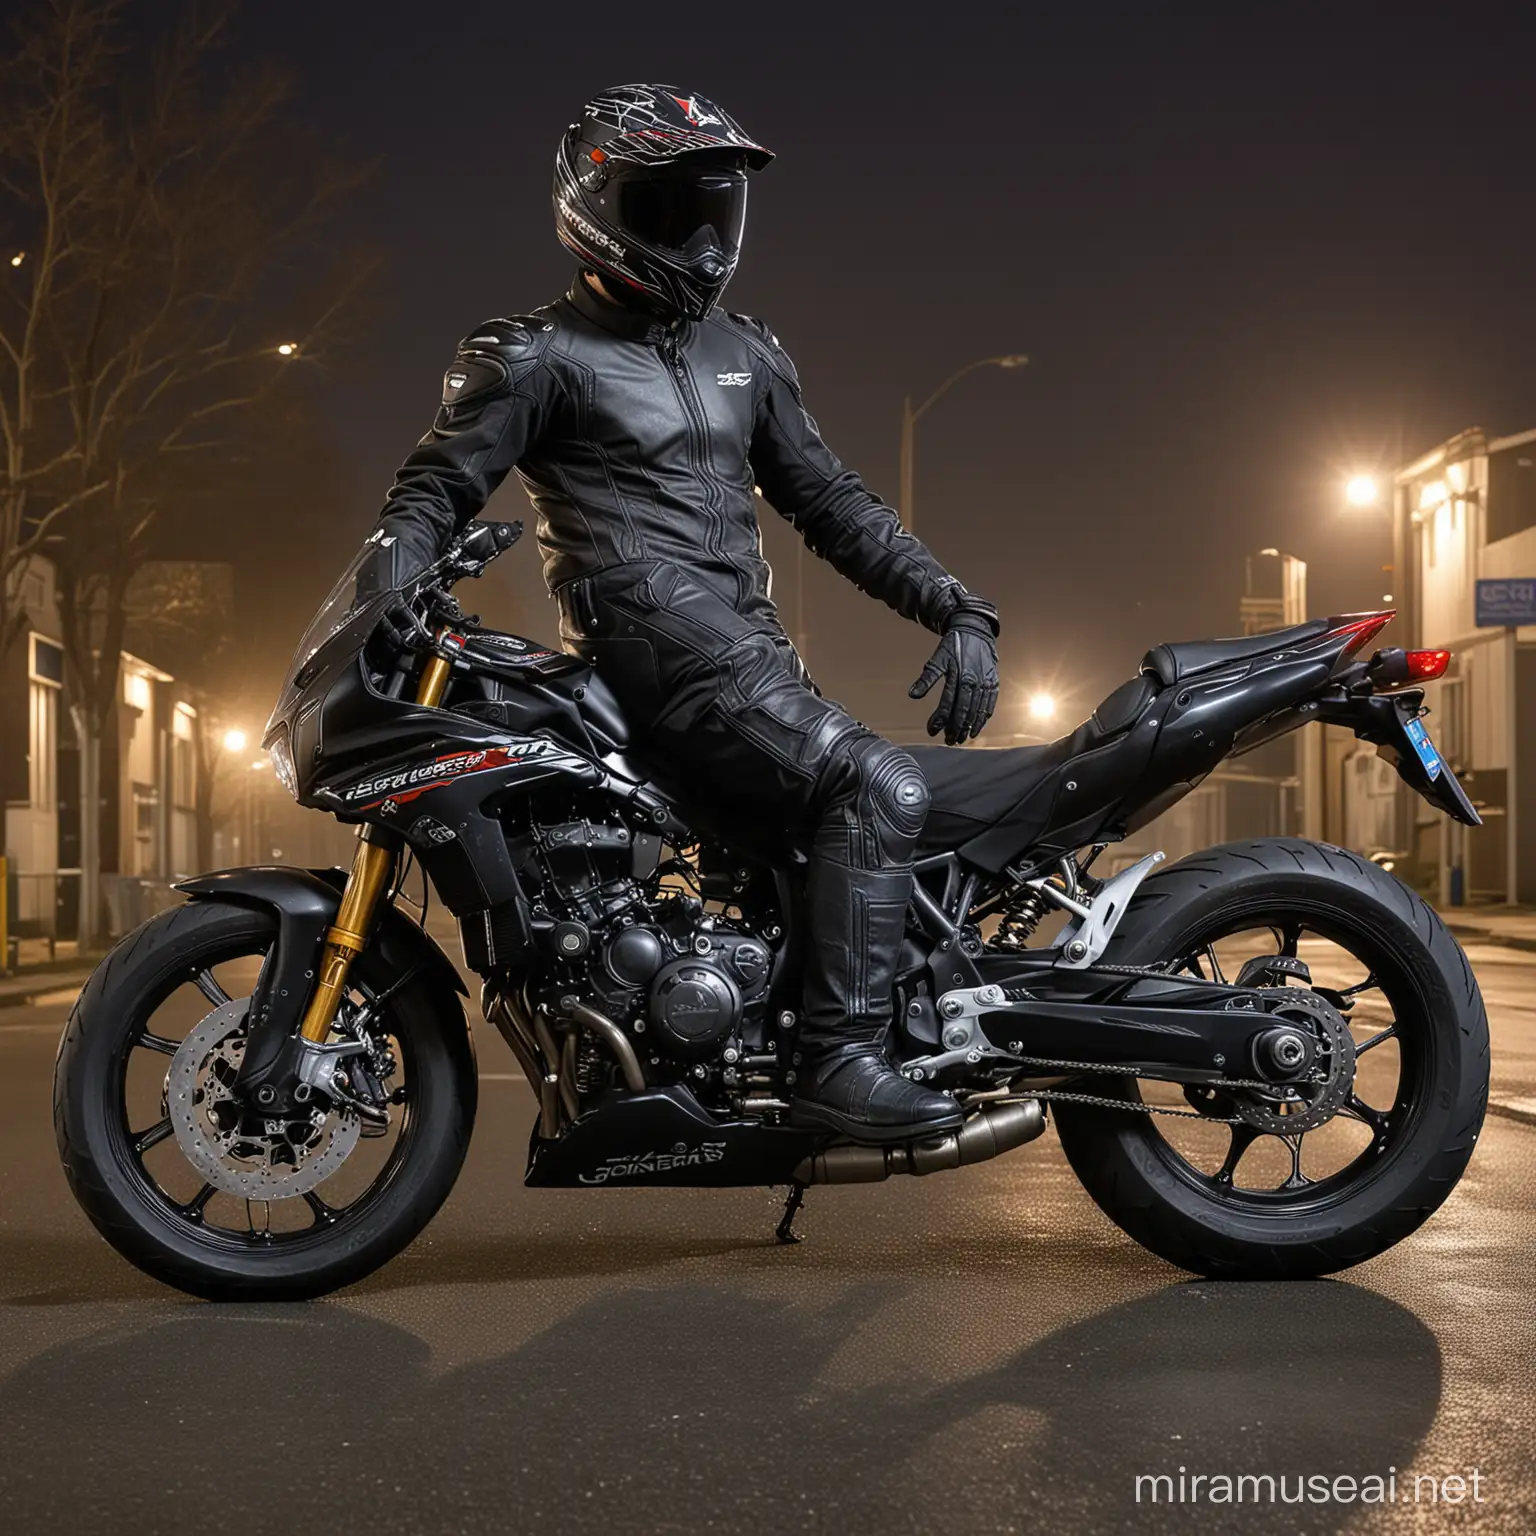 Symbiotic Integration Biker and Honda CBR600RR Exosuit Merge on Wet Pavement at Night